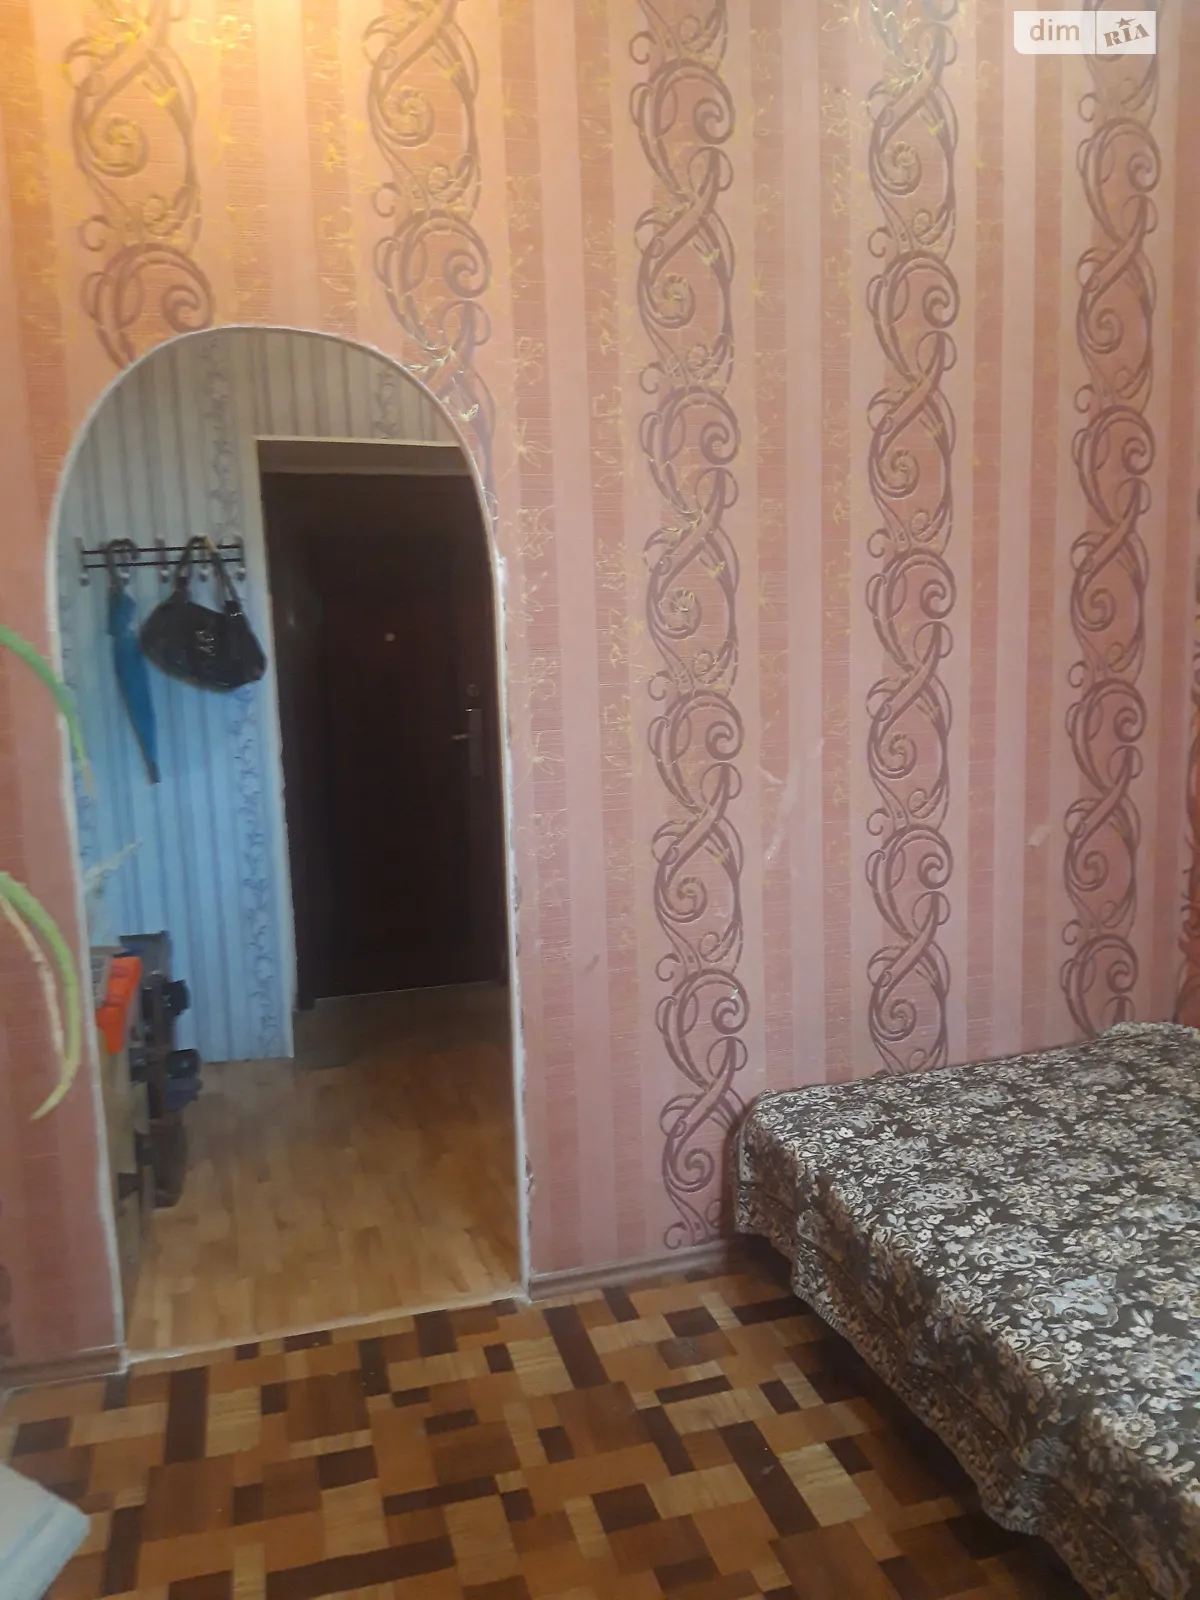 Продается комната 24 кв. м в Одессе, цена: 7500 $ - фото 1